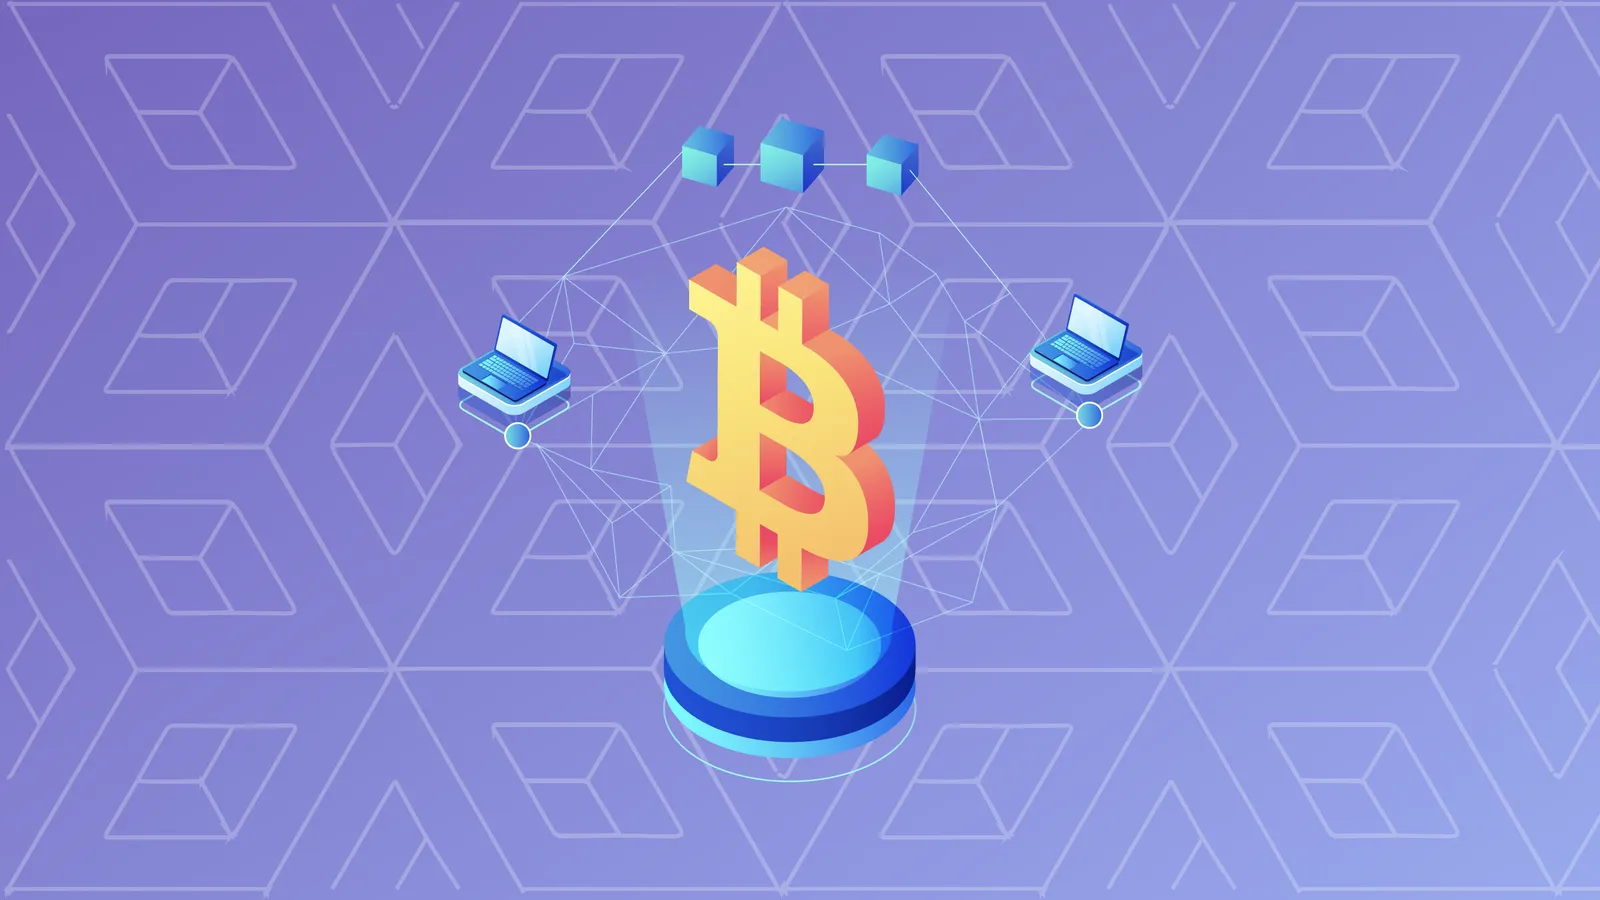 An illustration of Bitcoin sign with blockchain nodes around it